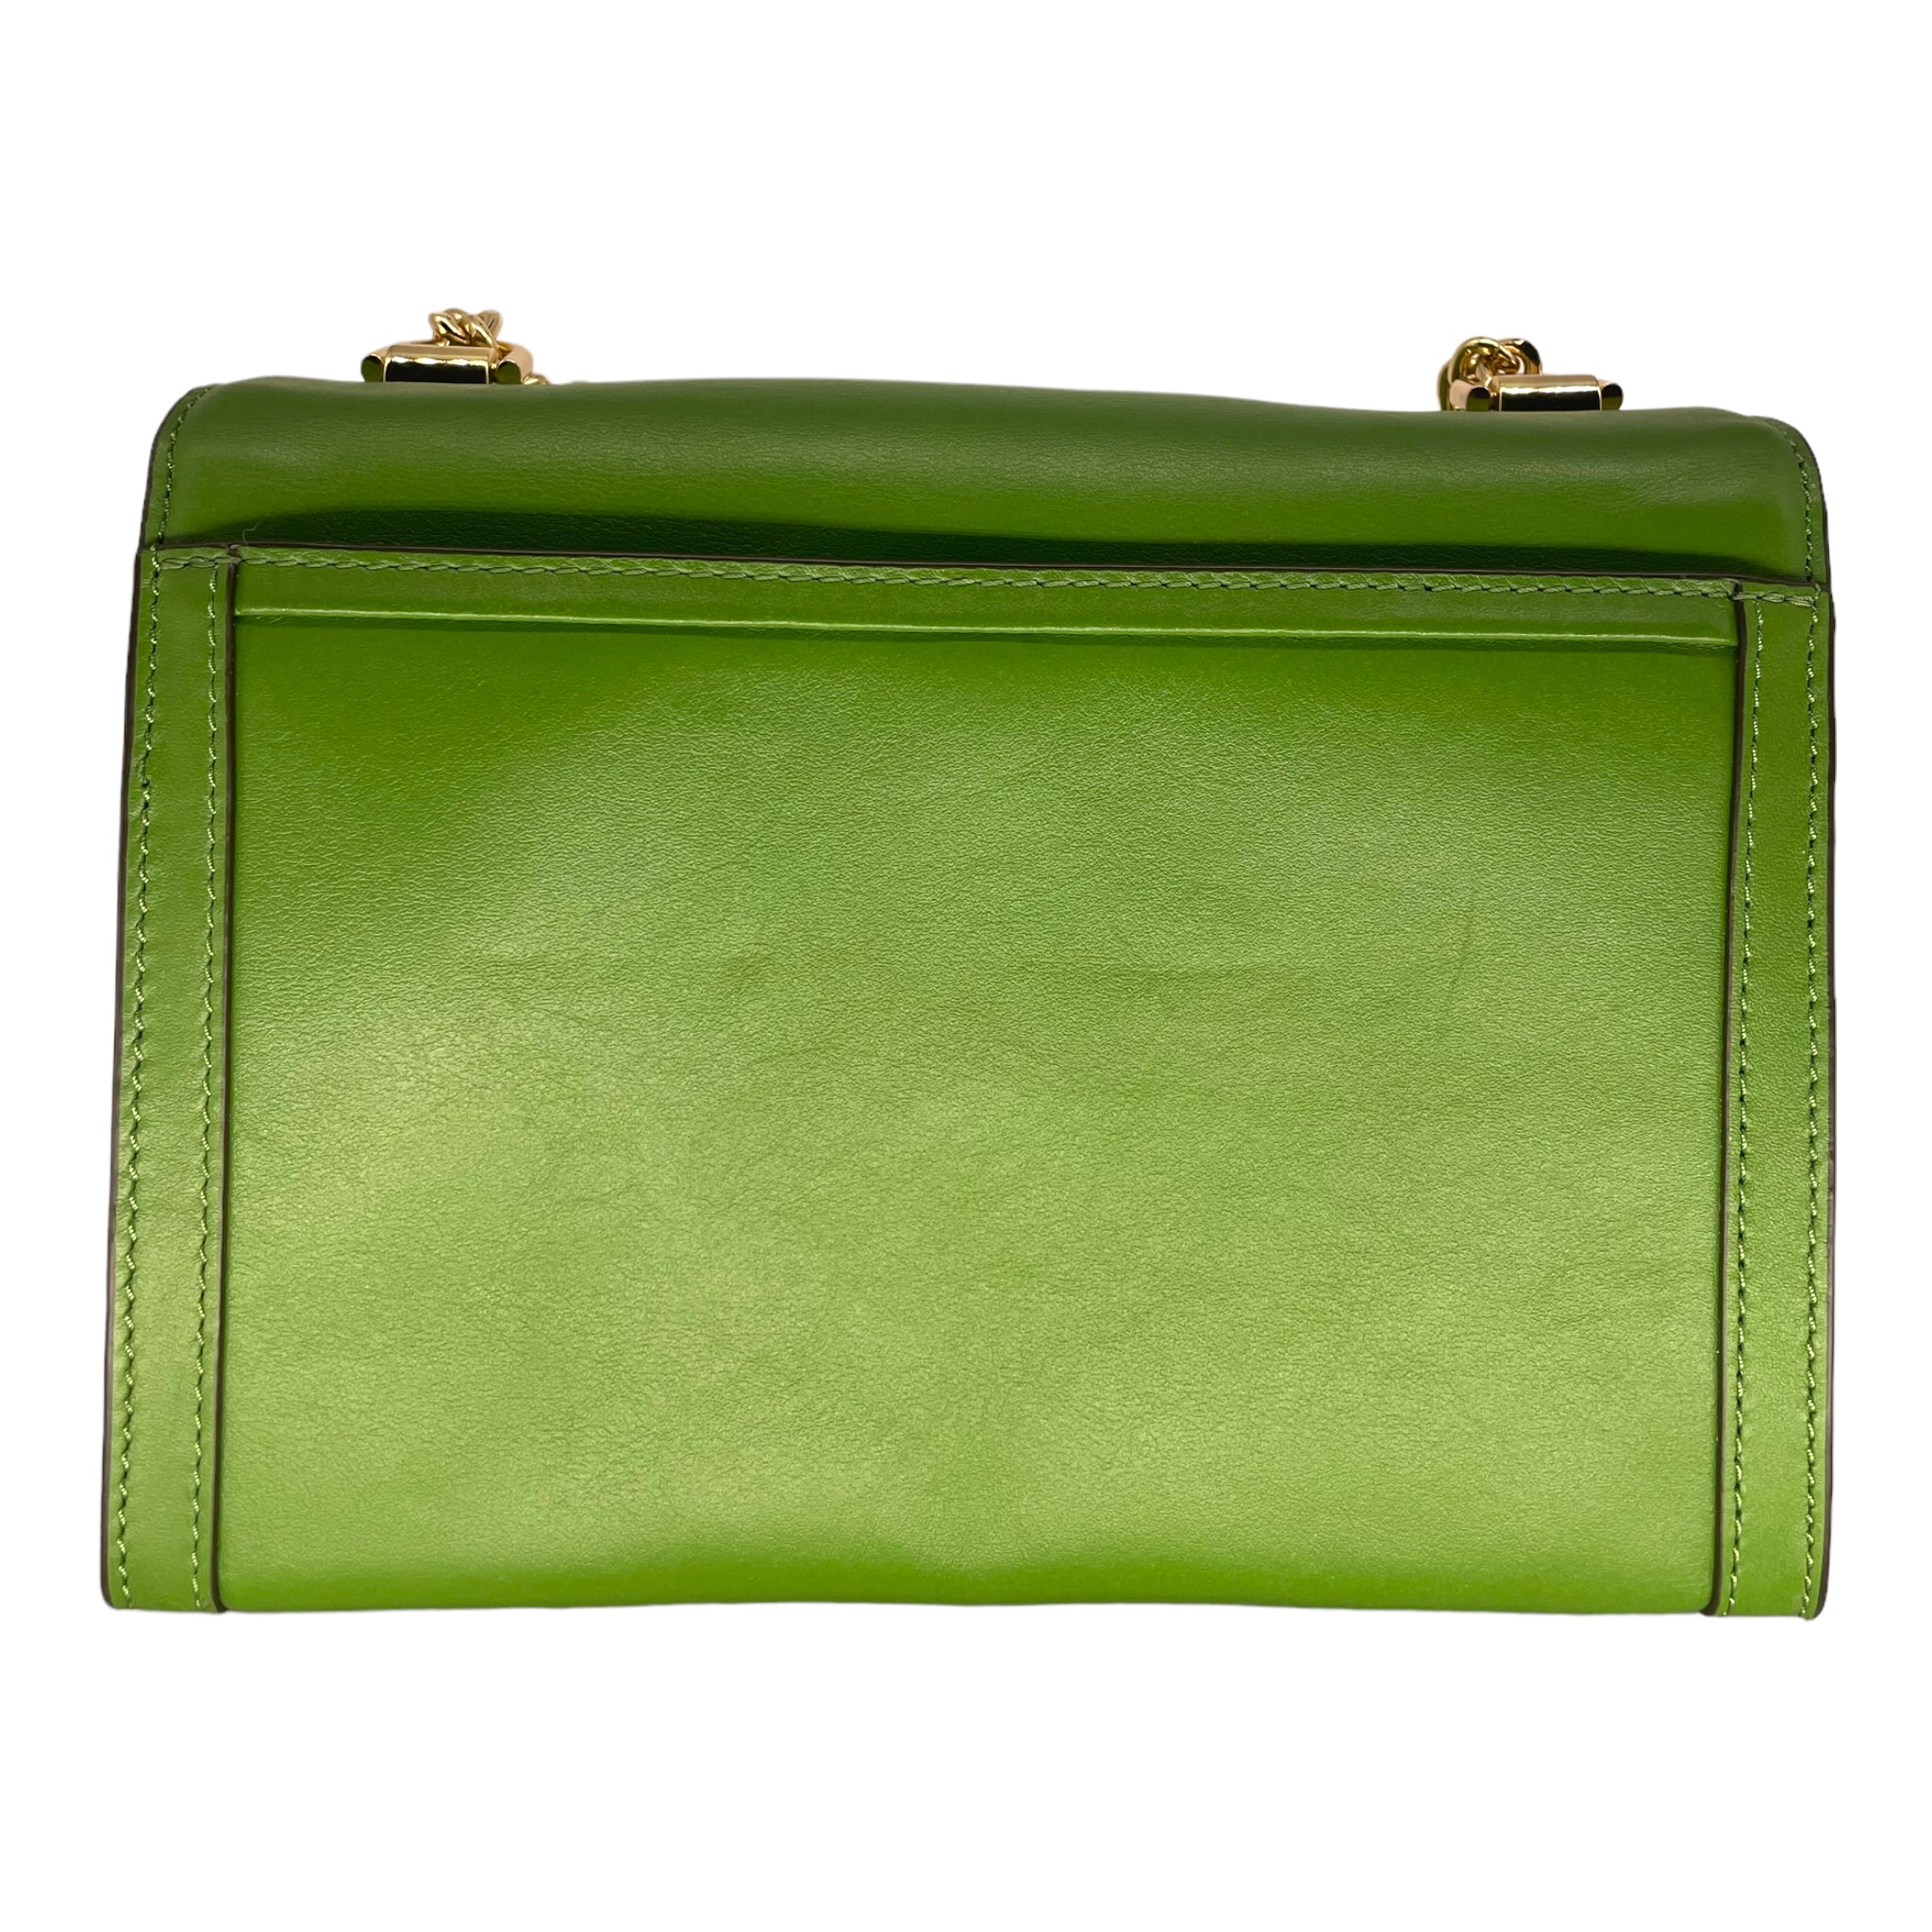 Handbags Michael Kors, Style code: 32r3s7cc3t-322-